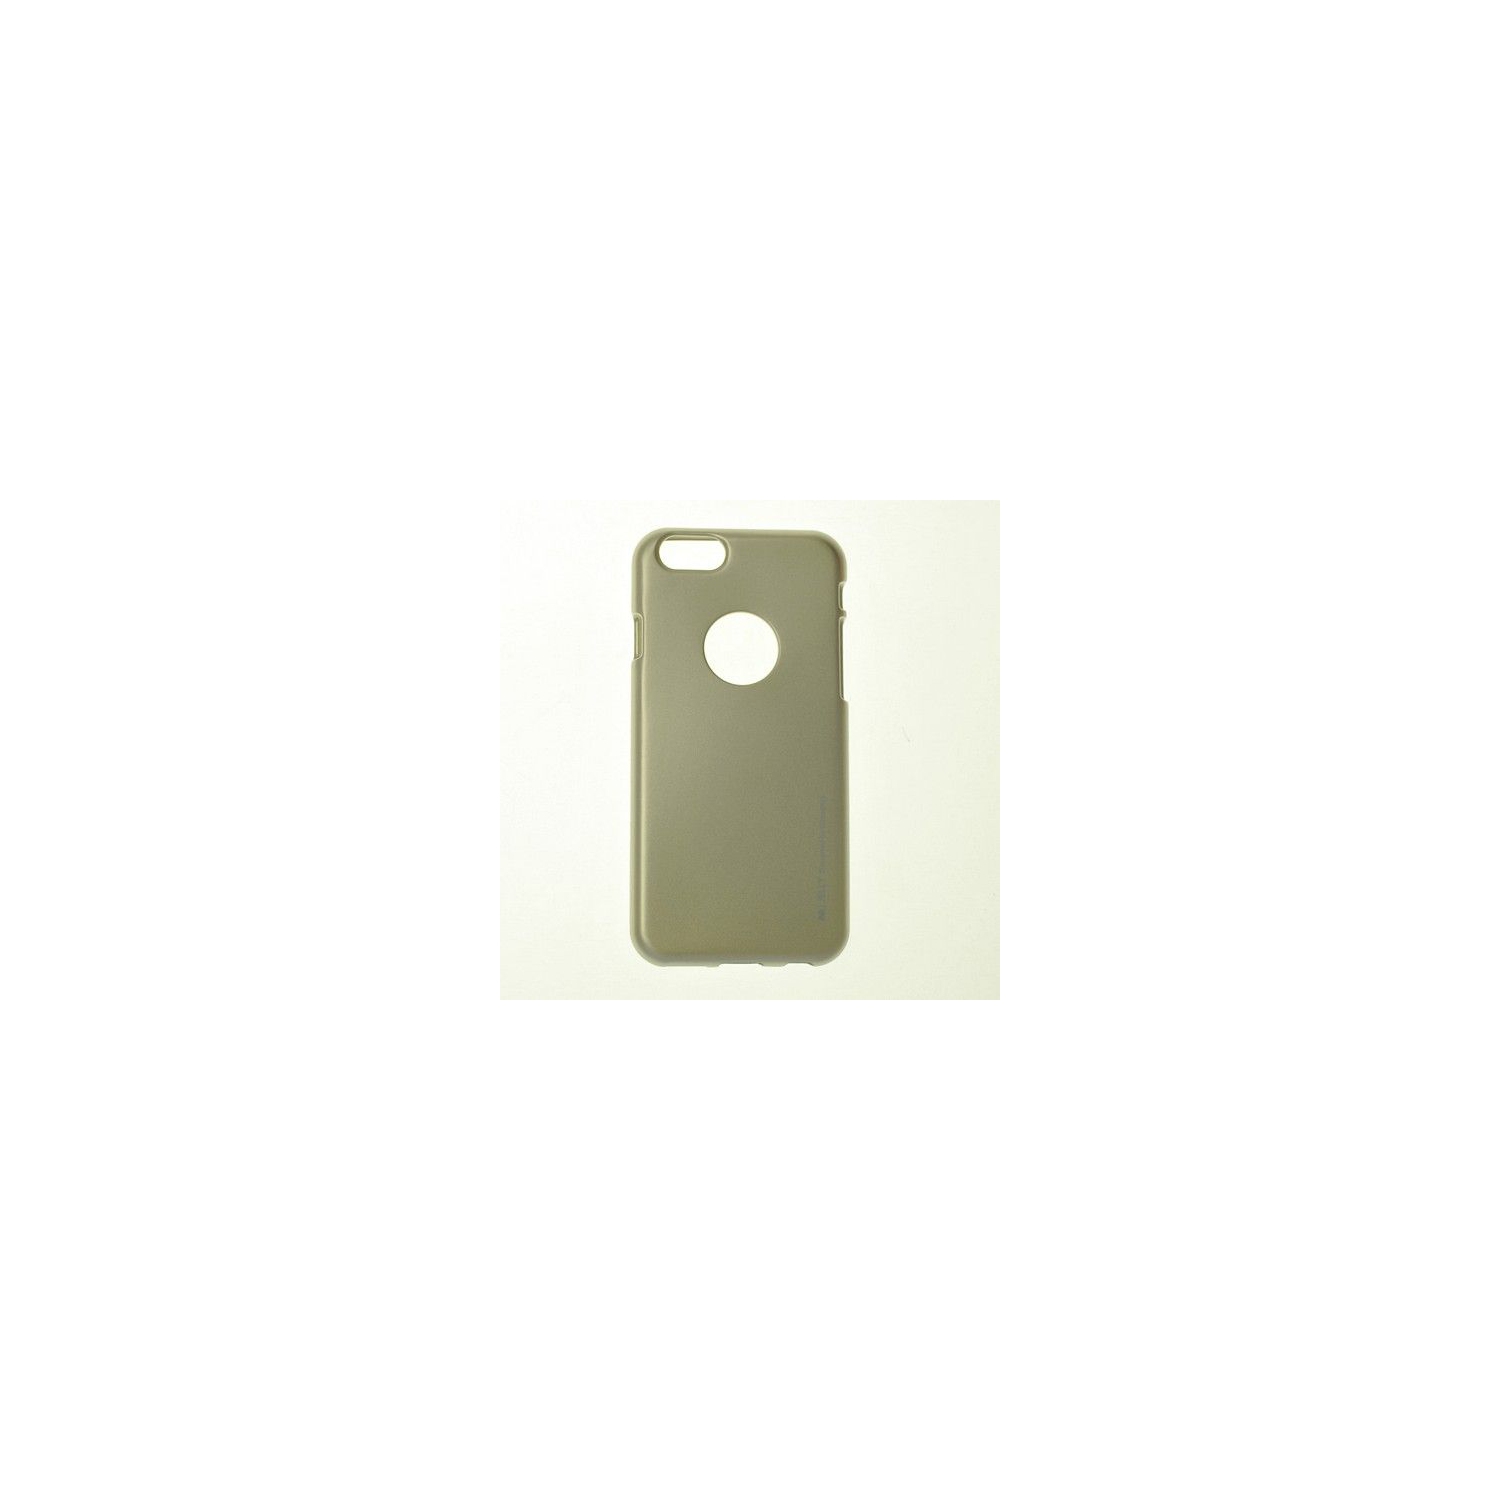 Iphone 5/s/SE Goospery iJelly Metal Case, Gold